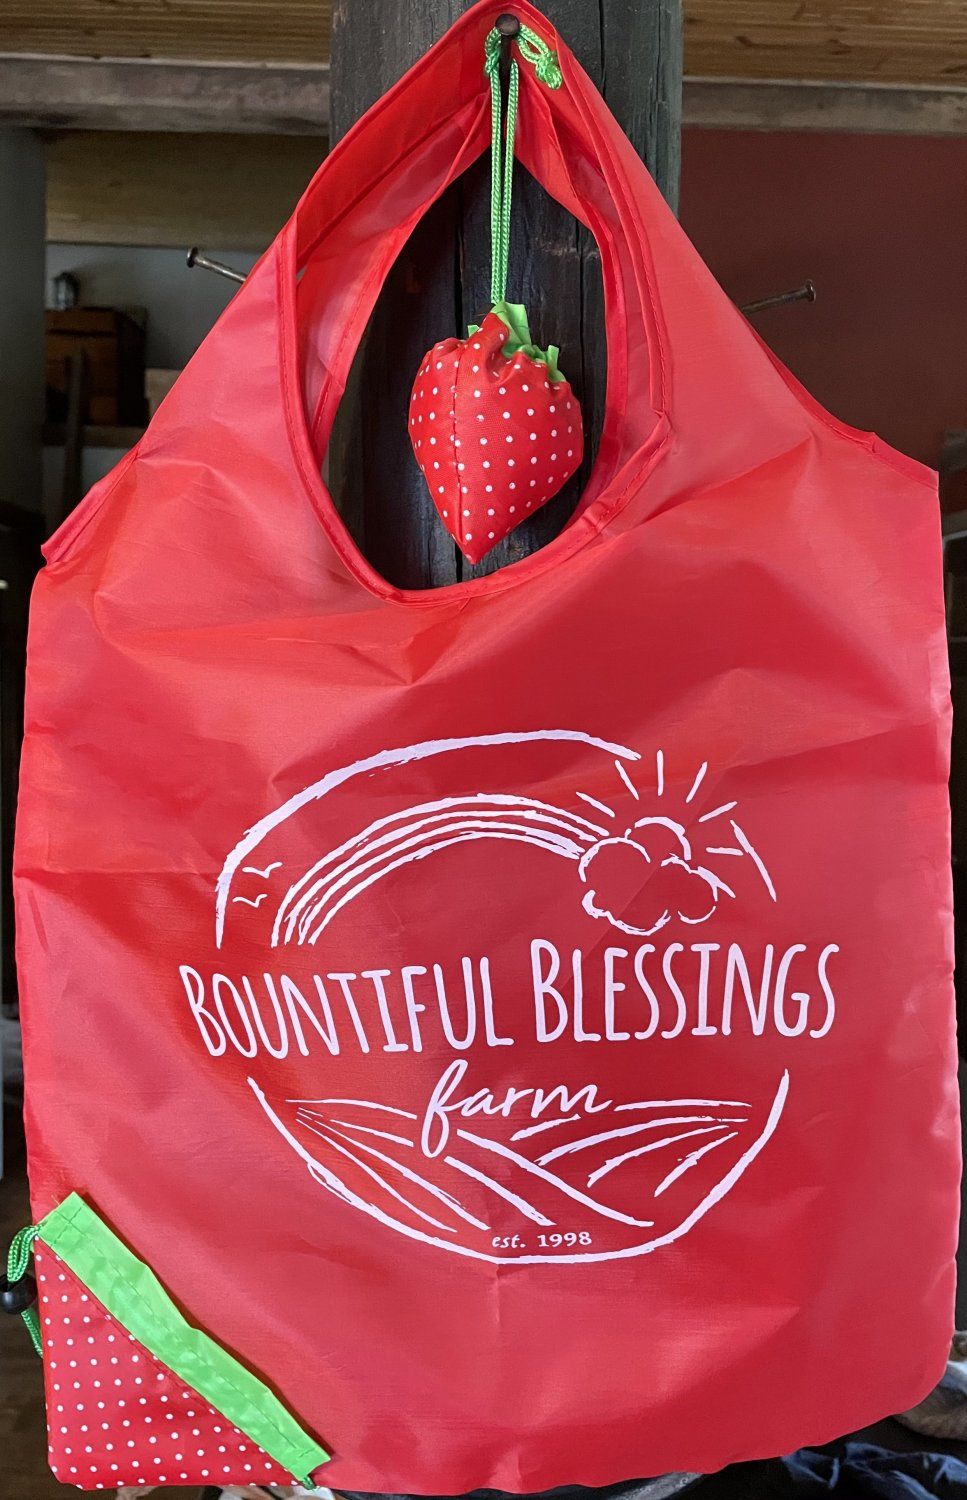 Previous Happening: Bountiful Blessings Bags